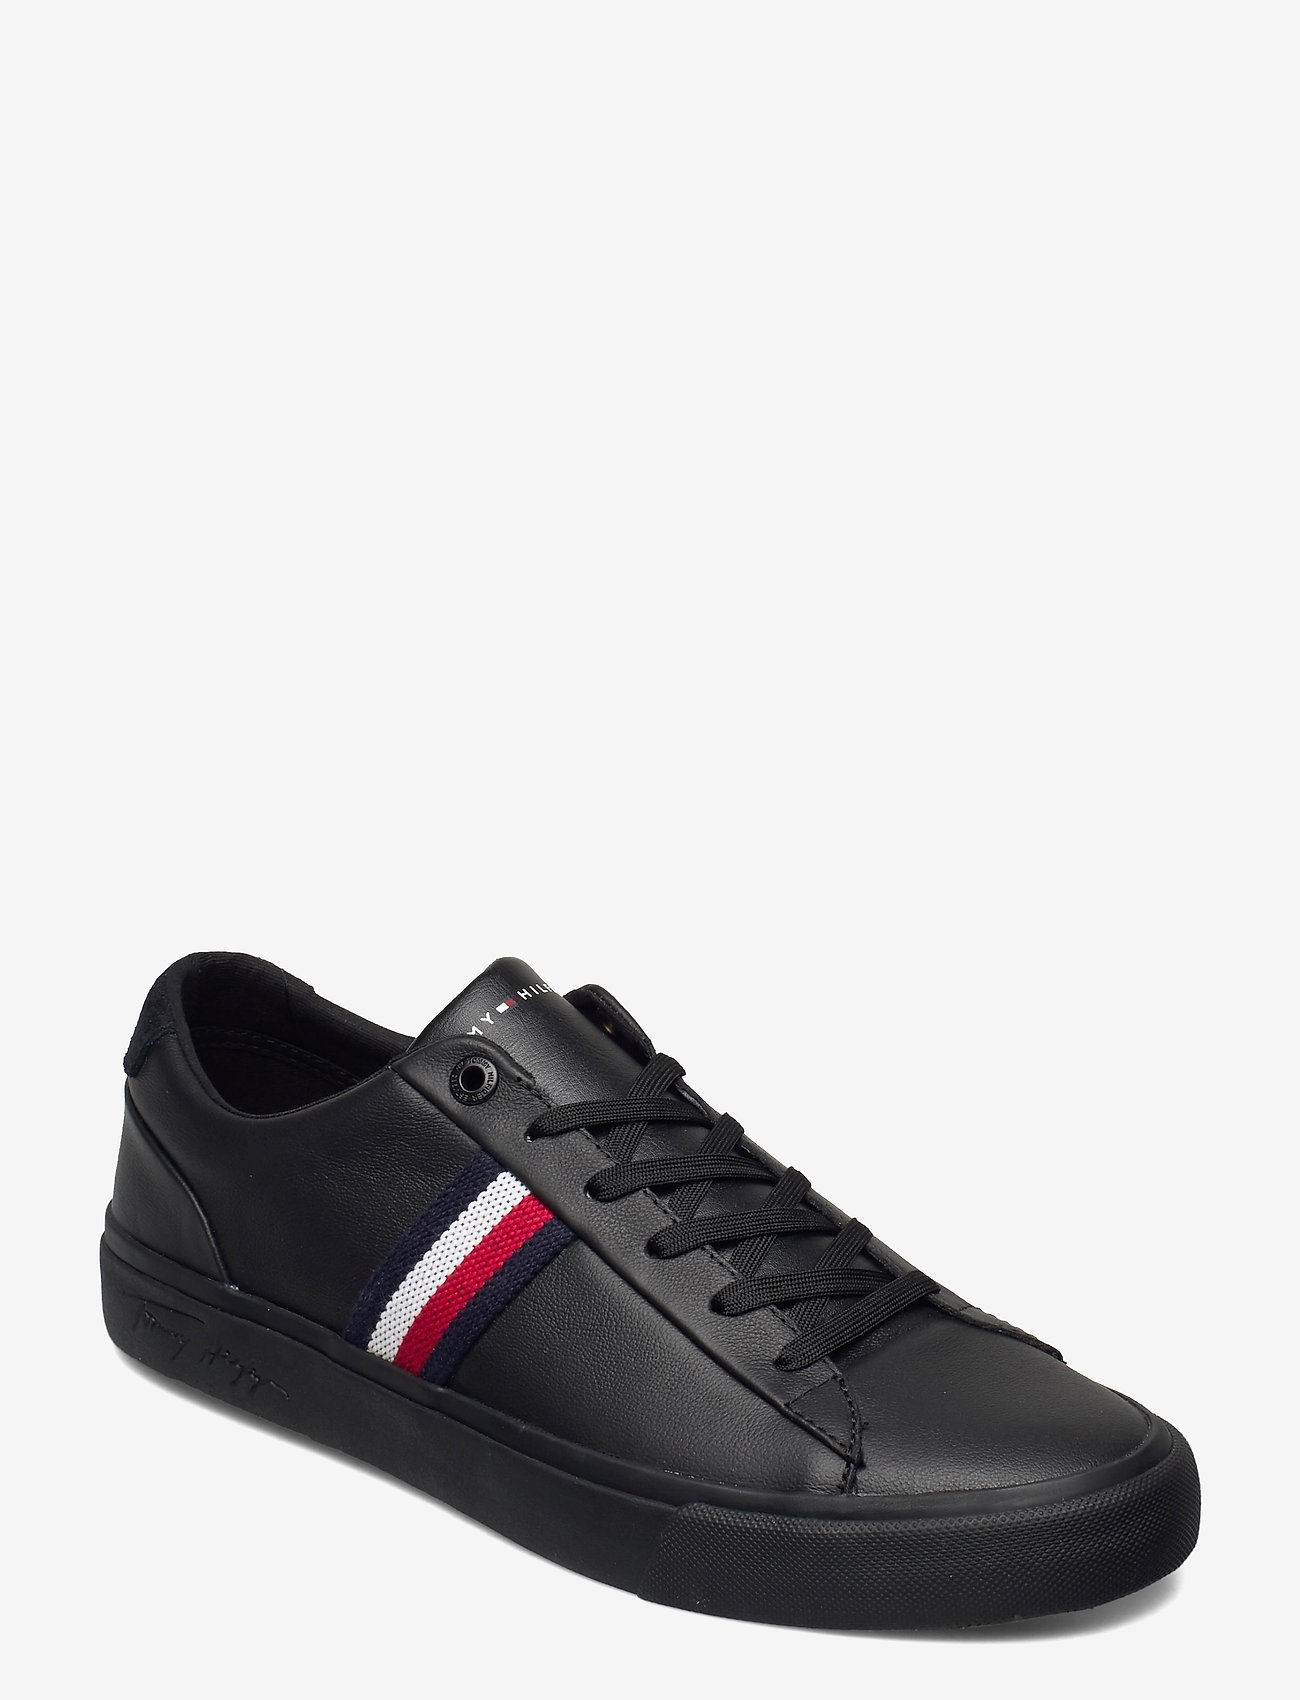 Corporate Leather Sneaker (Black) (99 